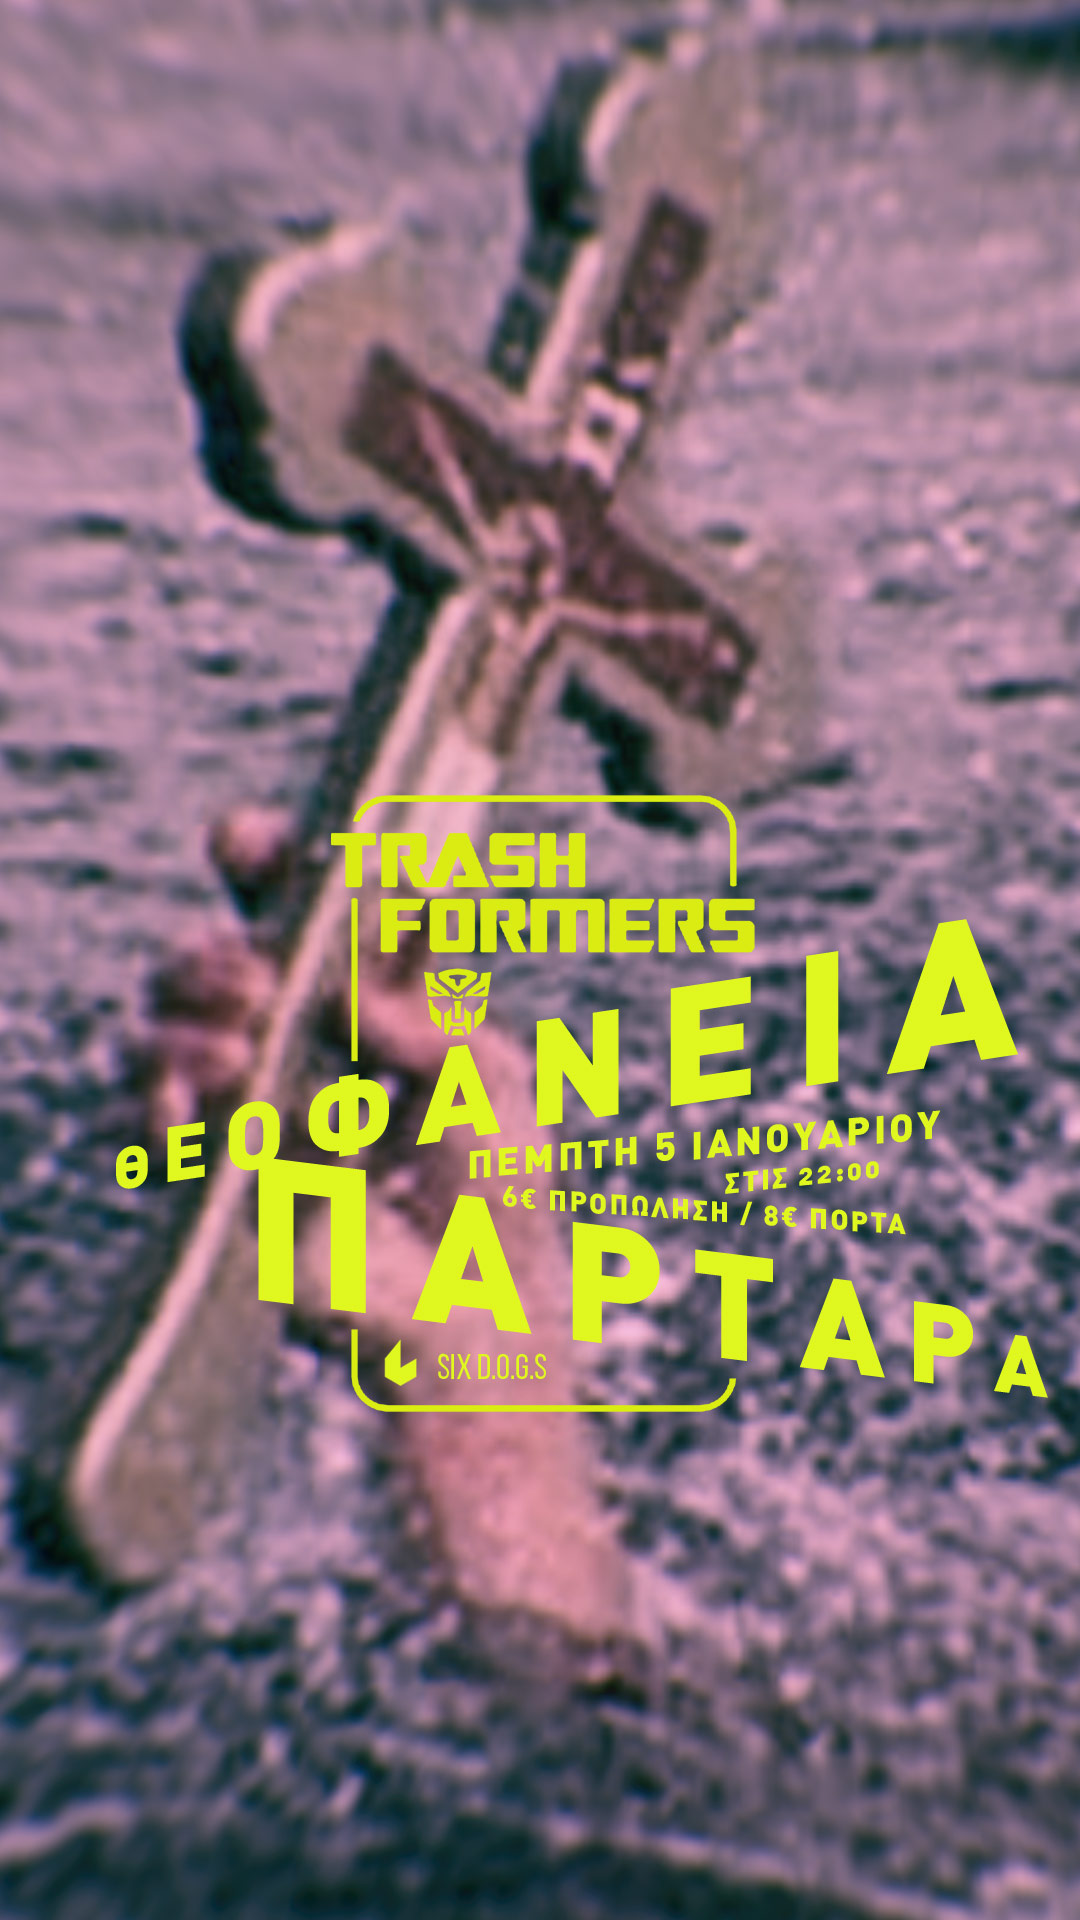 Trashformers :: Θεοφάνεια Παρτάρα at Six dogs - Poster